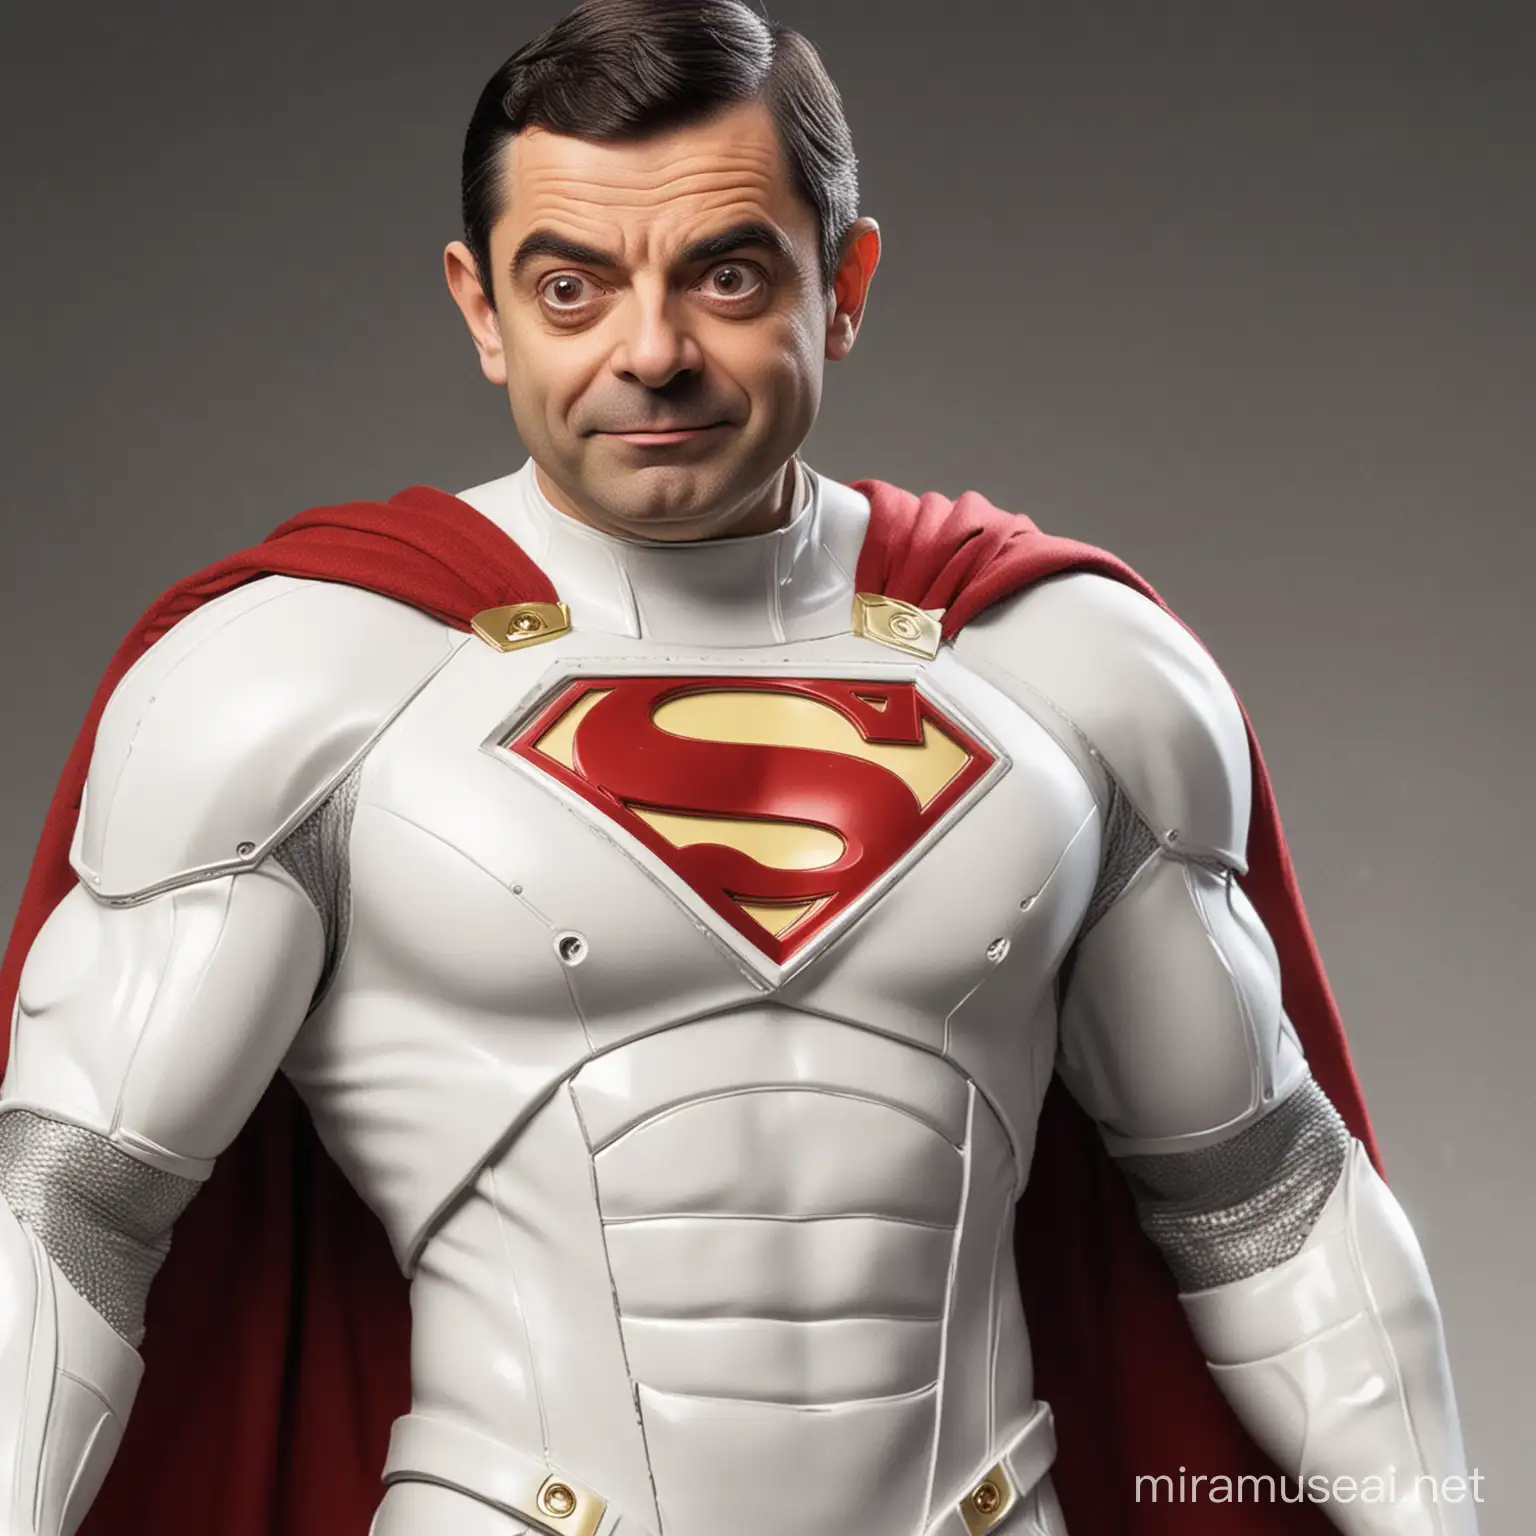 Mr Bean as Superman wearing Futuristic white armor